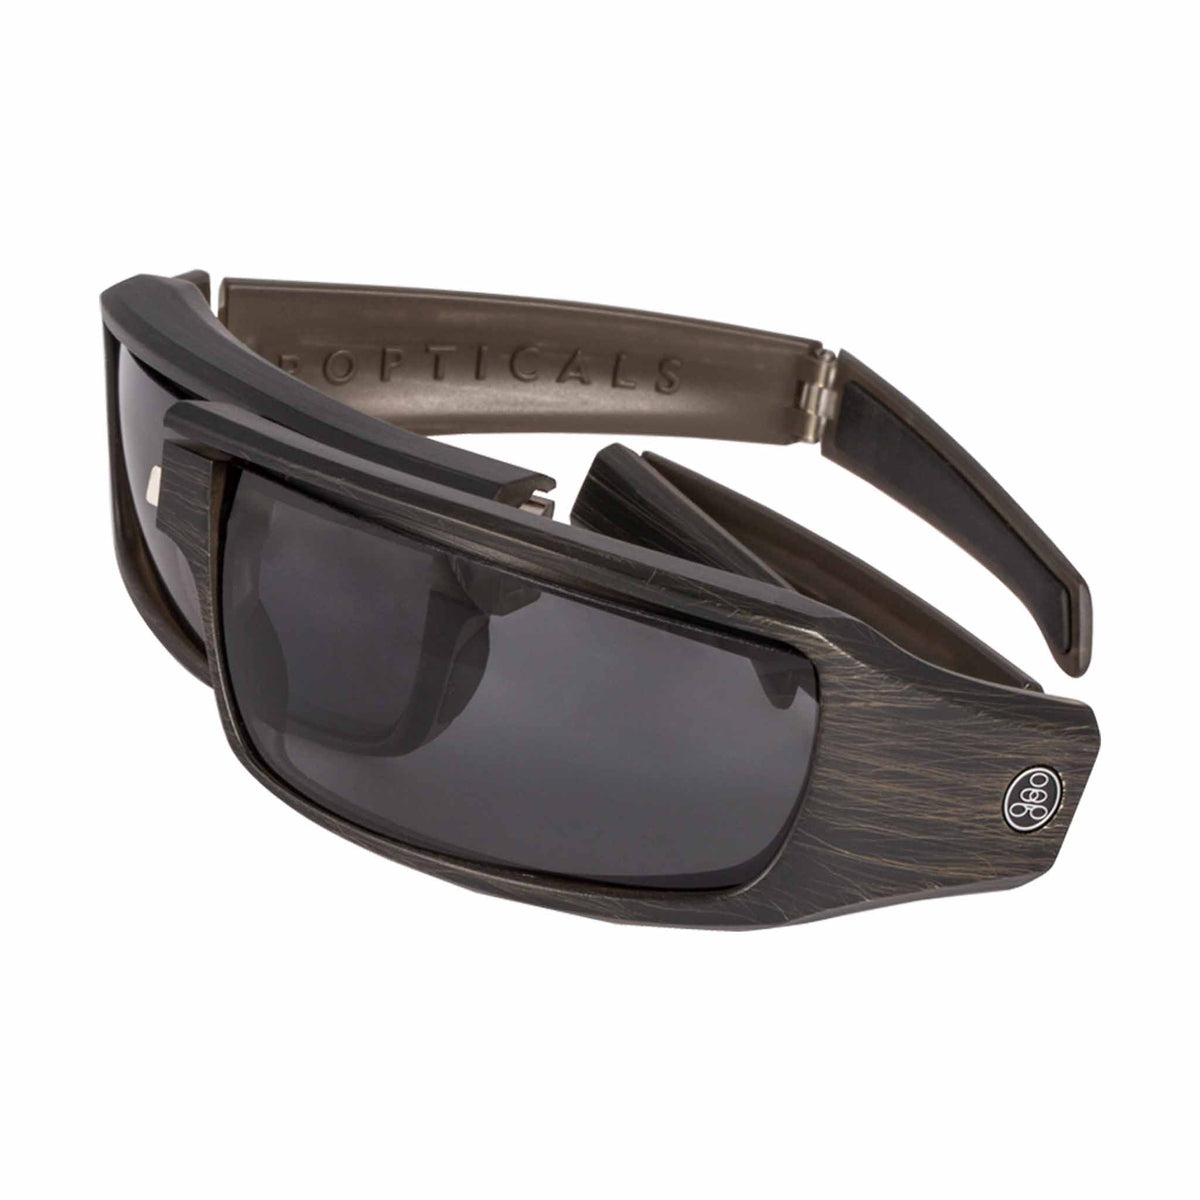 Popticals, Premium Compact Sunglasses, PopSign, 090020-ZUGP, Polarized Sunglasses, Matte Brush Black Frame, Gray Lenses, Spider View